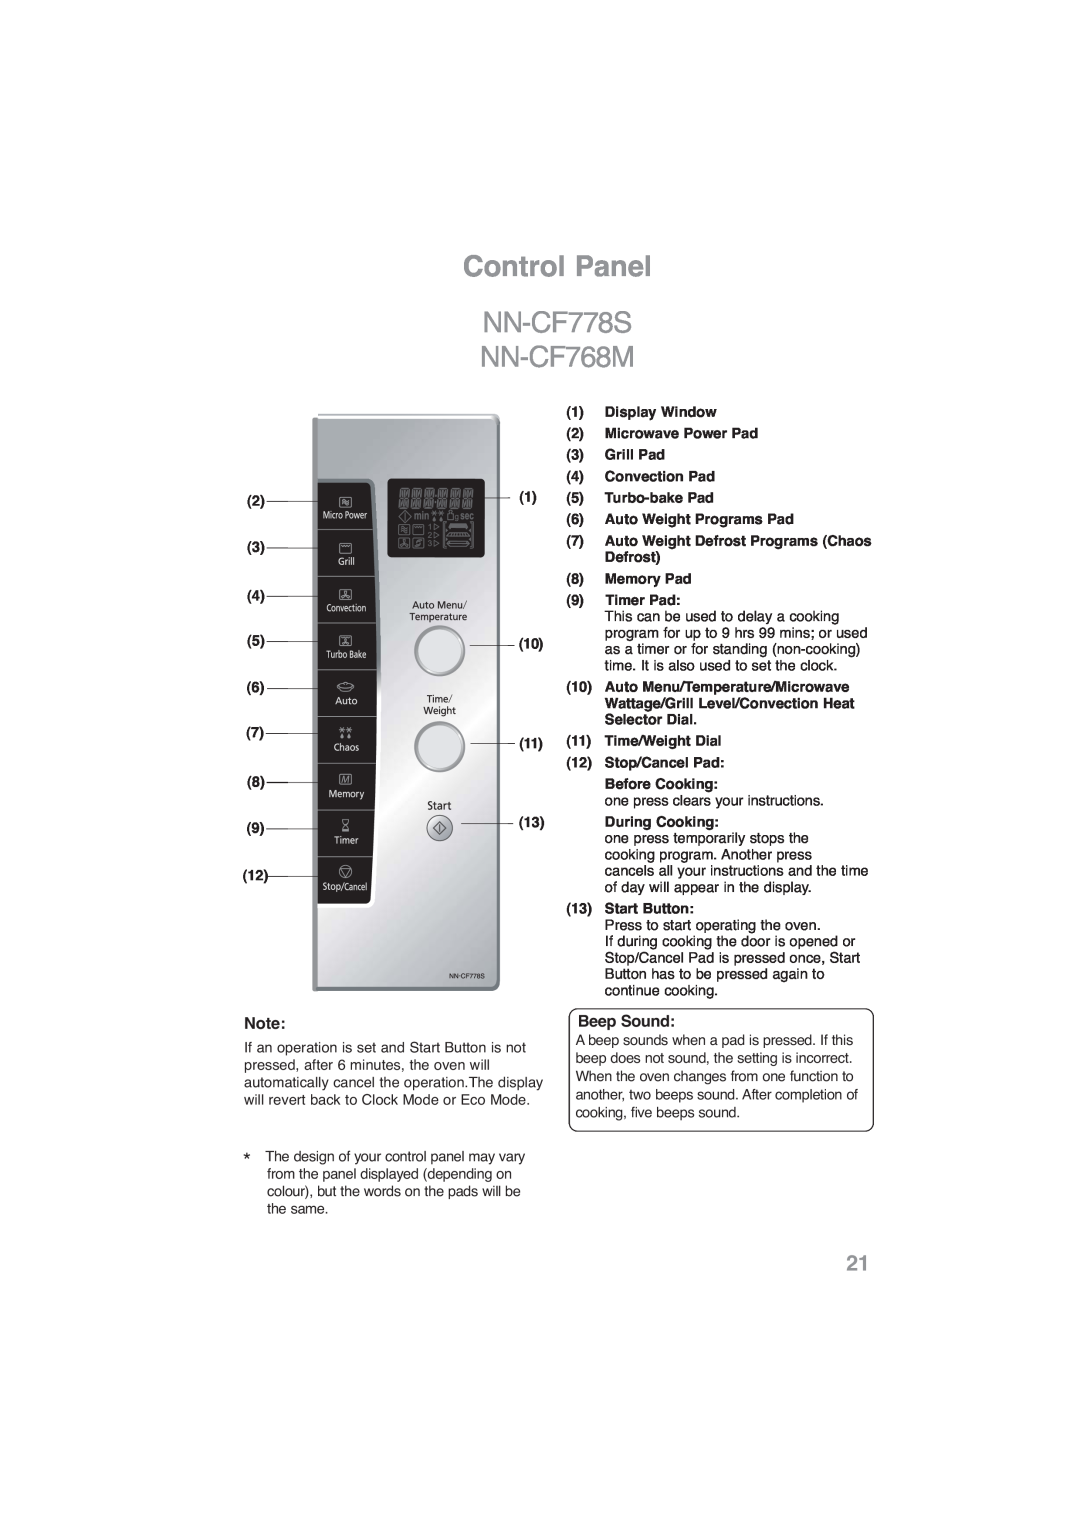 Panasonic Control Panel, NN-CF778S NN-CF768M, Beep Sound, Display Window, Microwave Power Pad, Grill Pad, Turbo-bakePad 